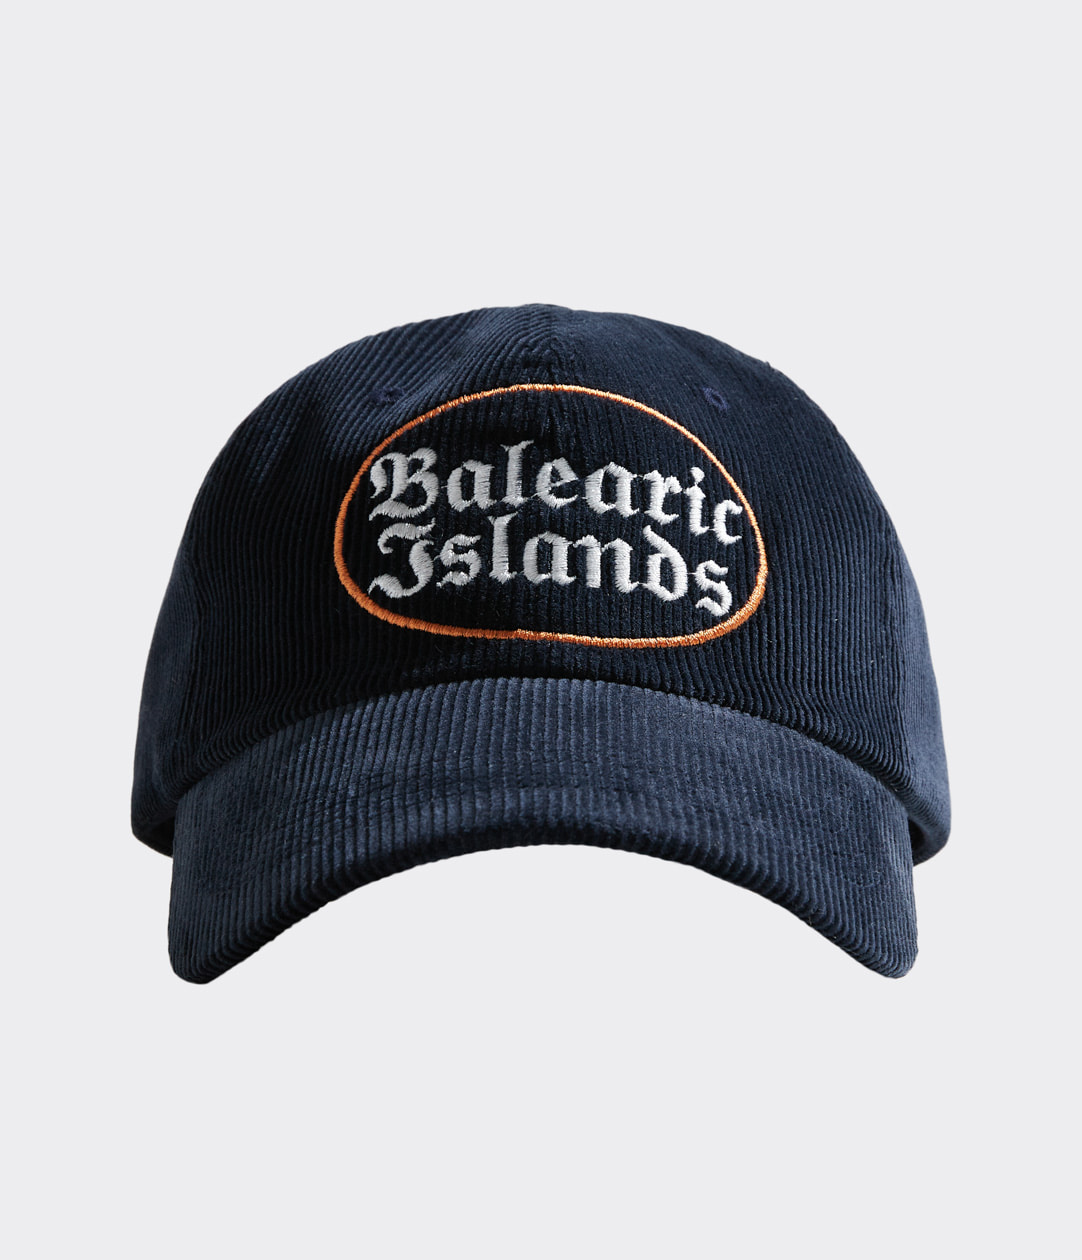 Calico Baseball Cap (Balearic Emb.) / Dark Navy